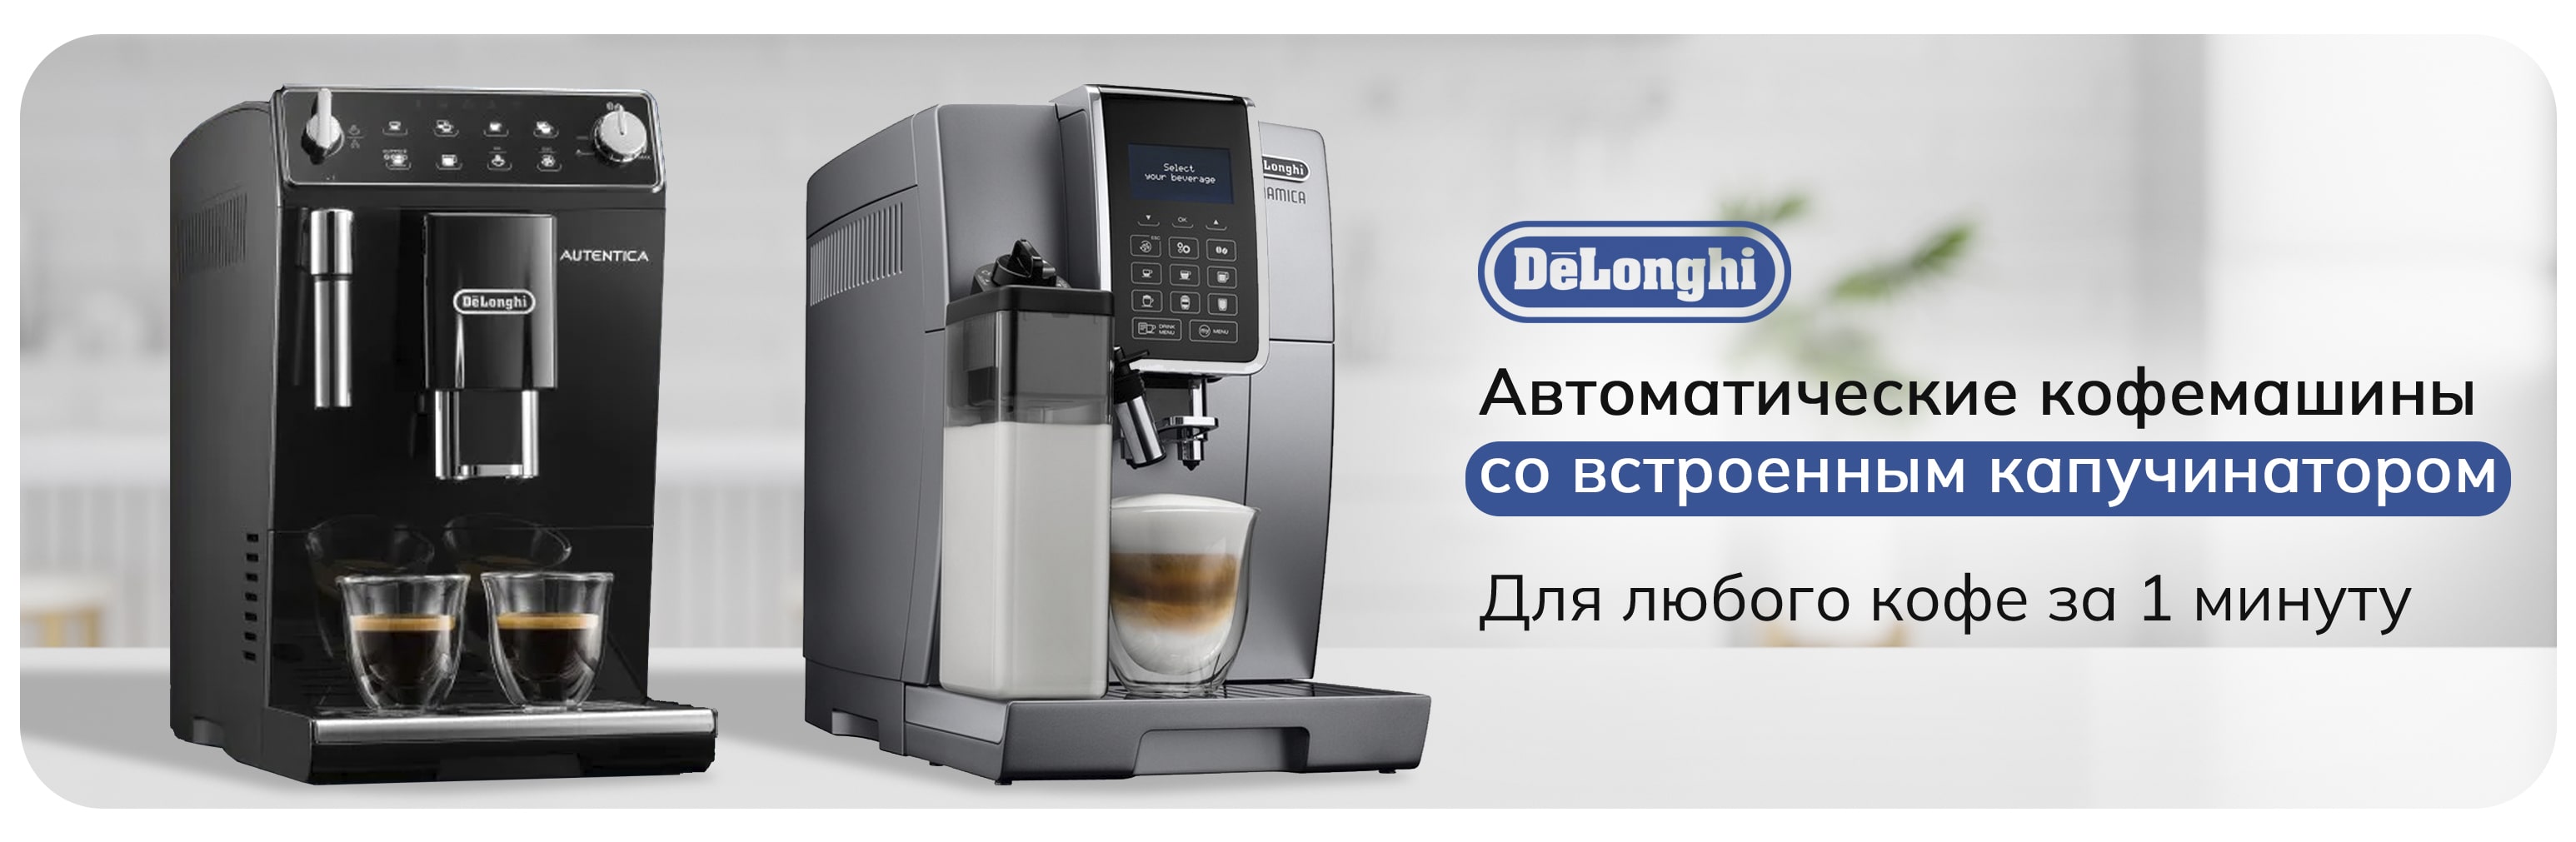 Автоматическая кофемашина Delonghi на столе